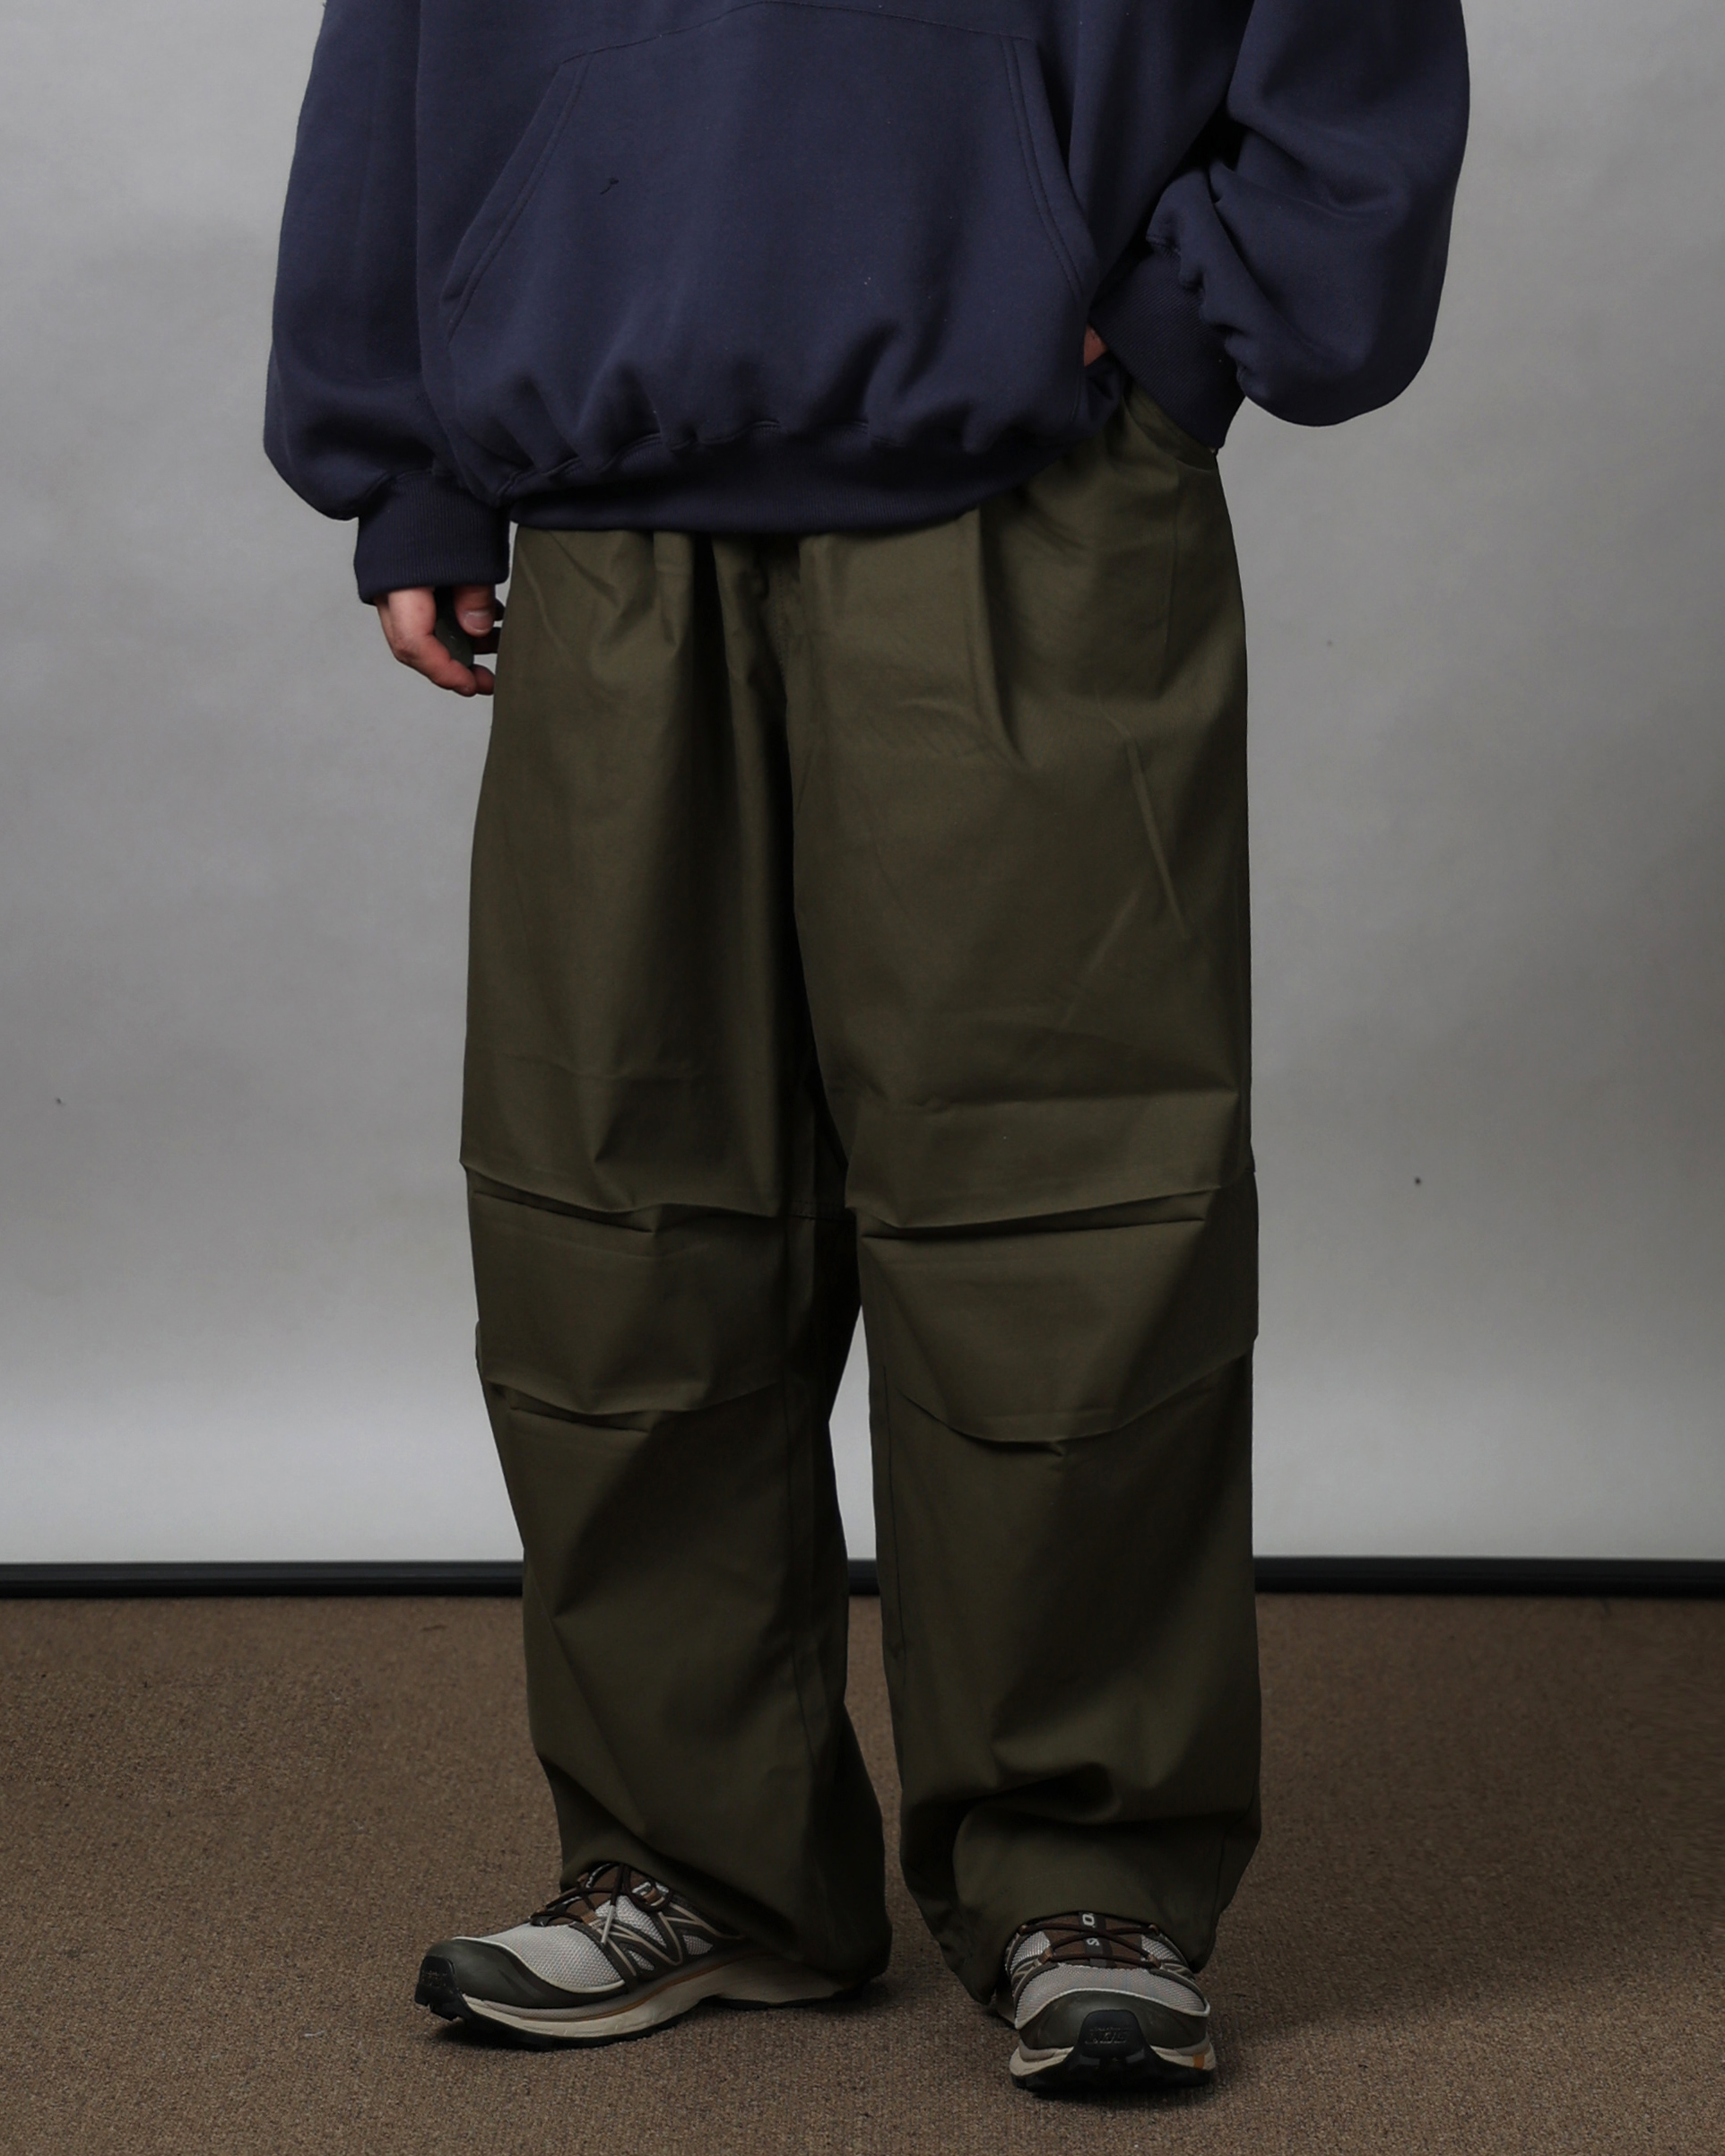 WAOT Bulky Cotton Parachute Pants (Black/Olive/Gray/Beige) - 8차 리오더 (4/23 배송예정)